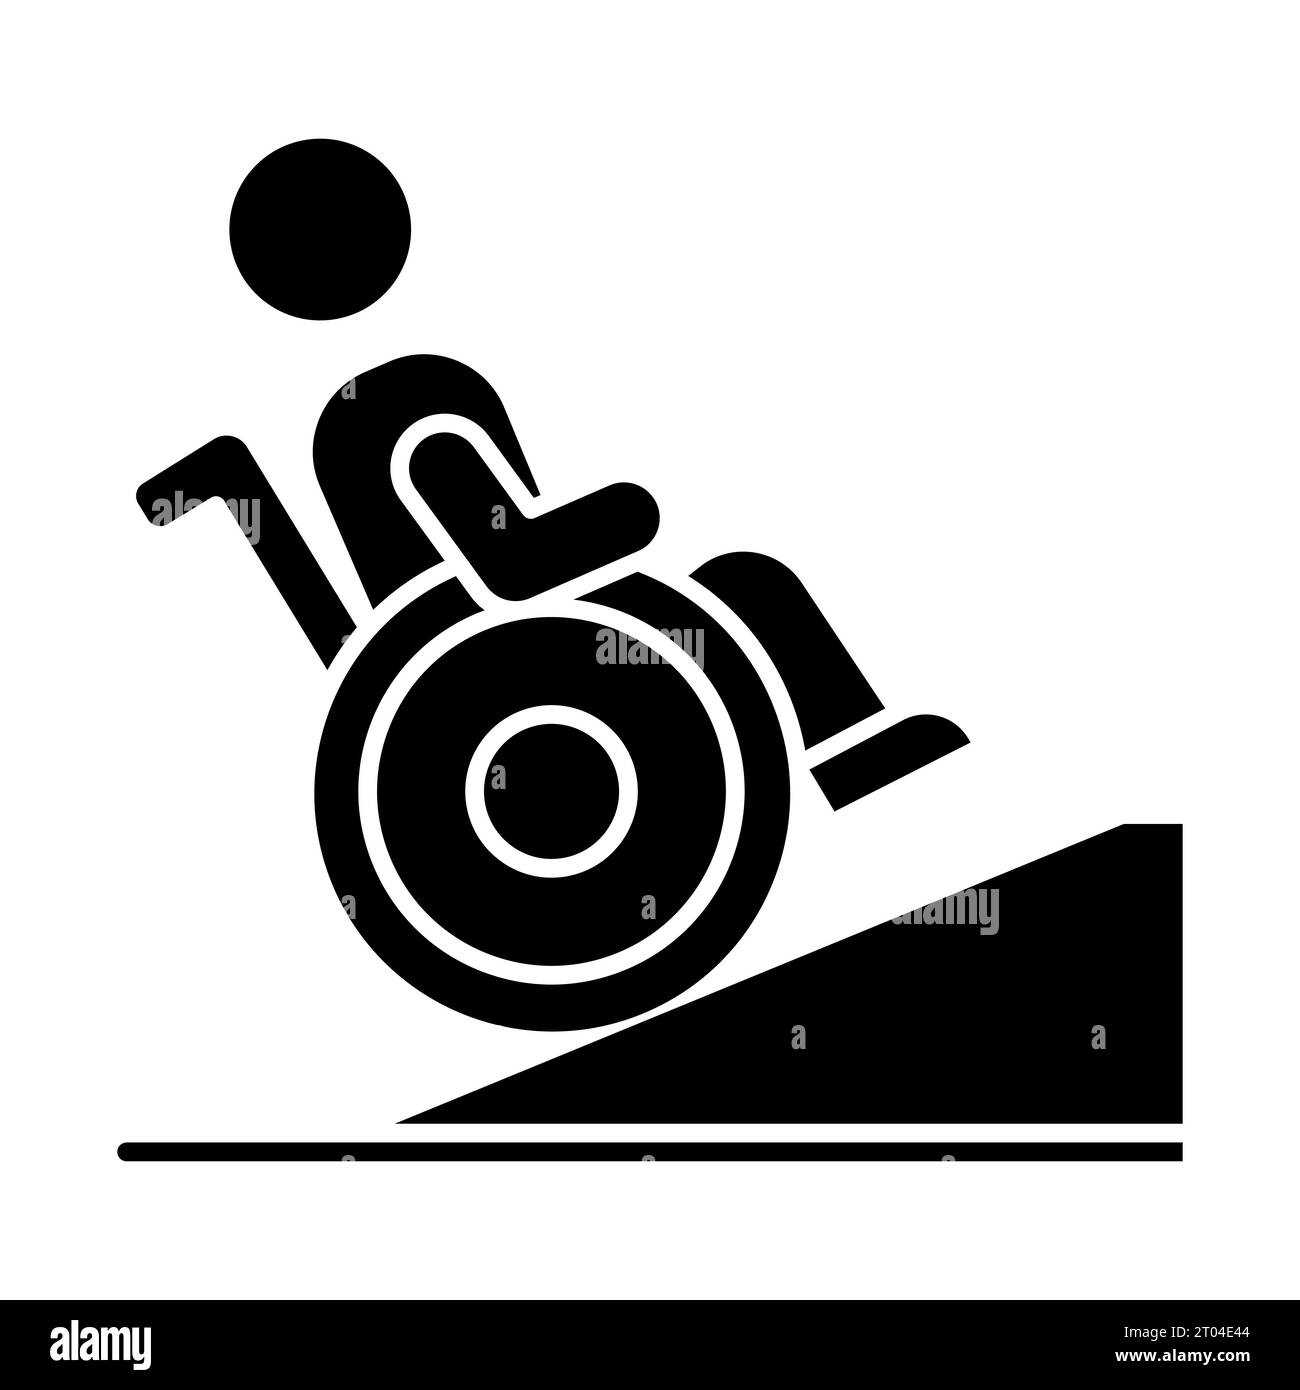 2D simple glyph style black handicap ramp icon Stock Vector